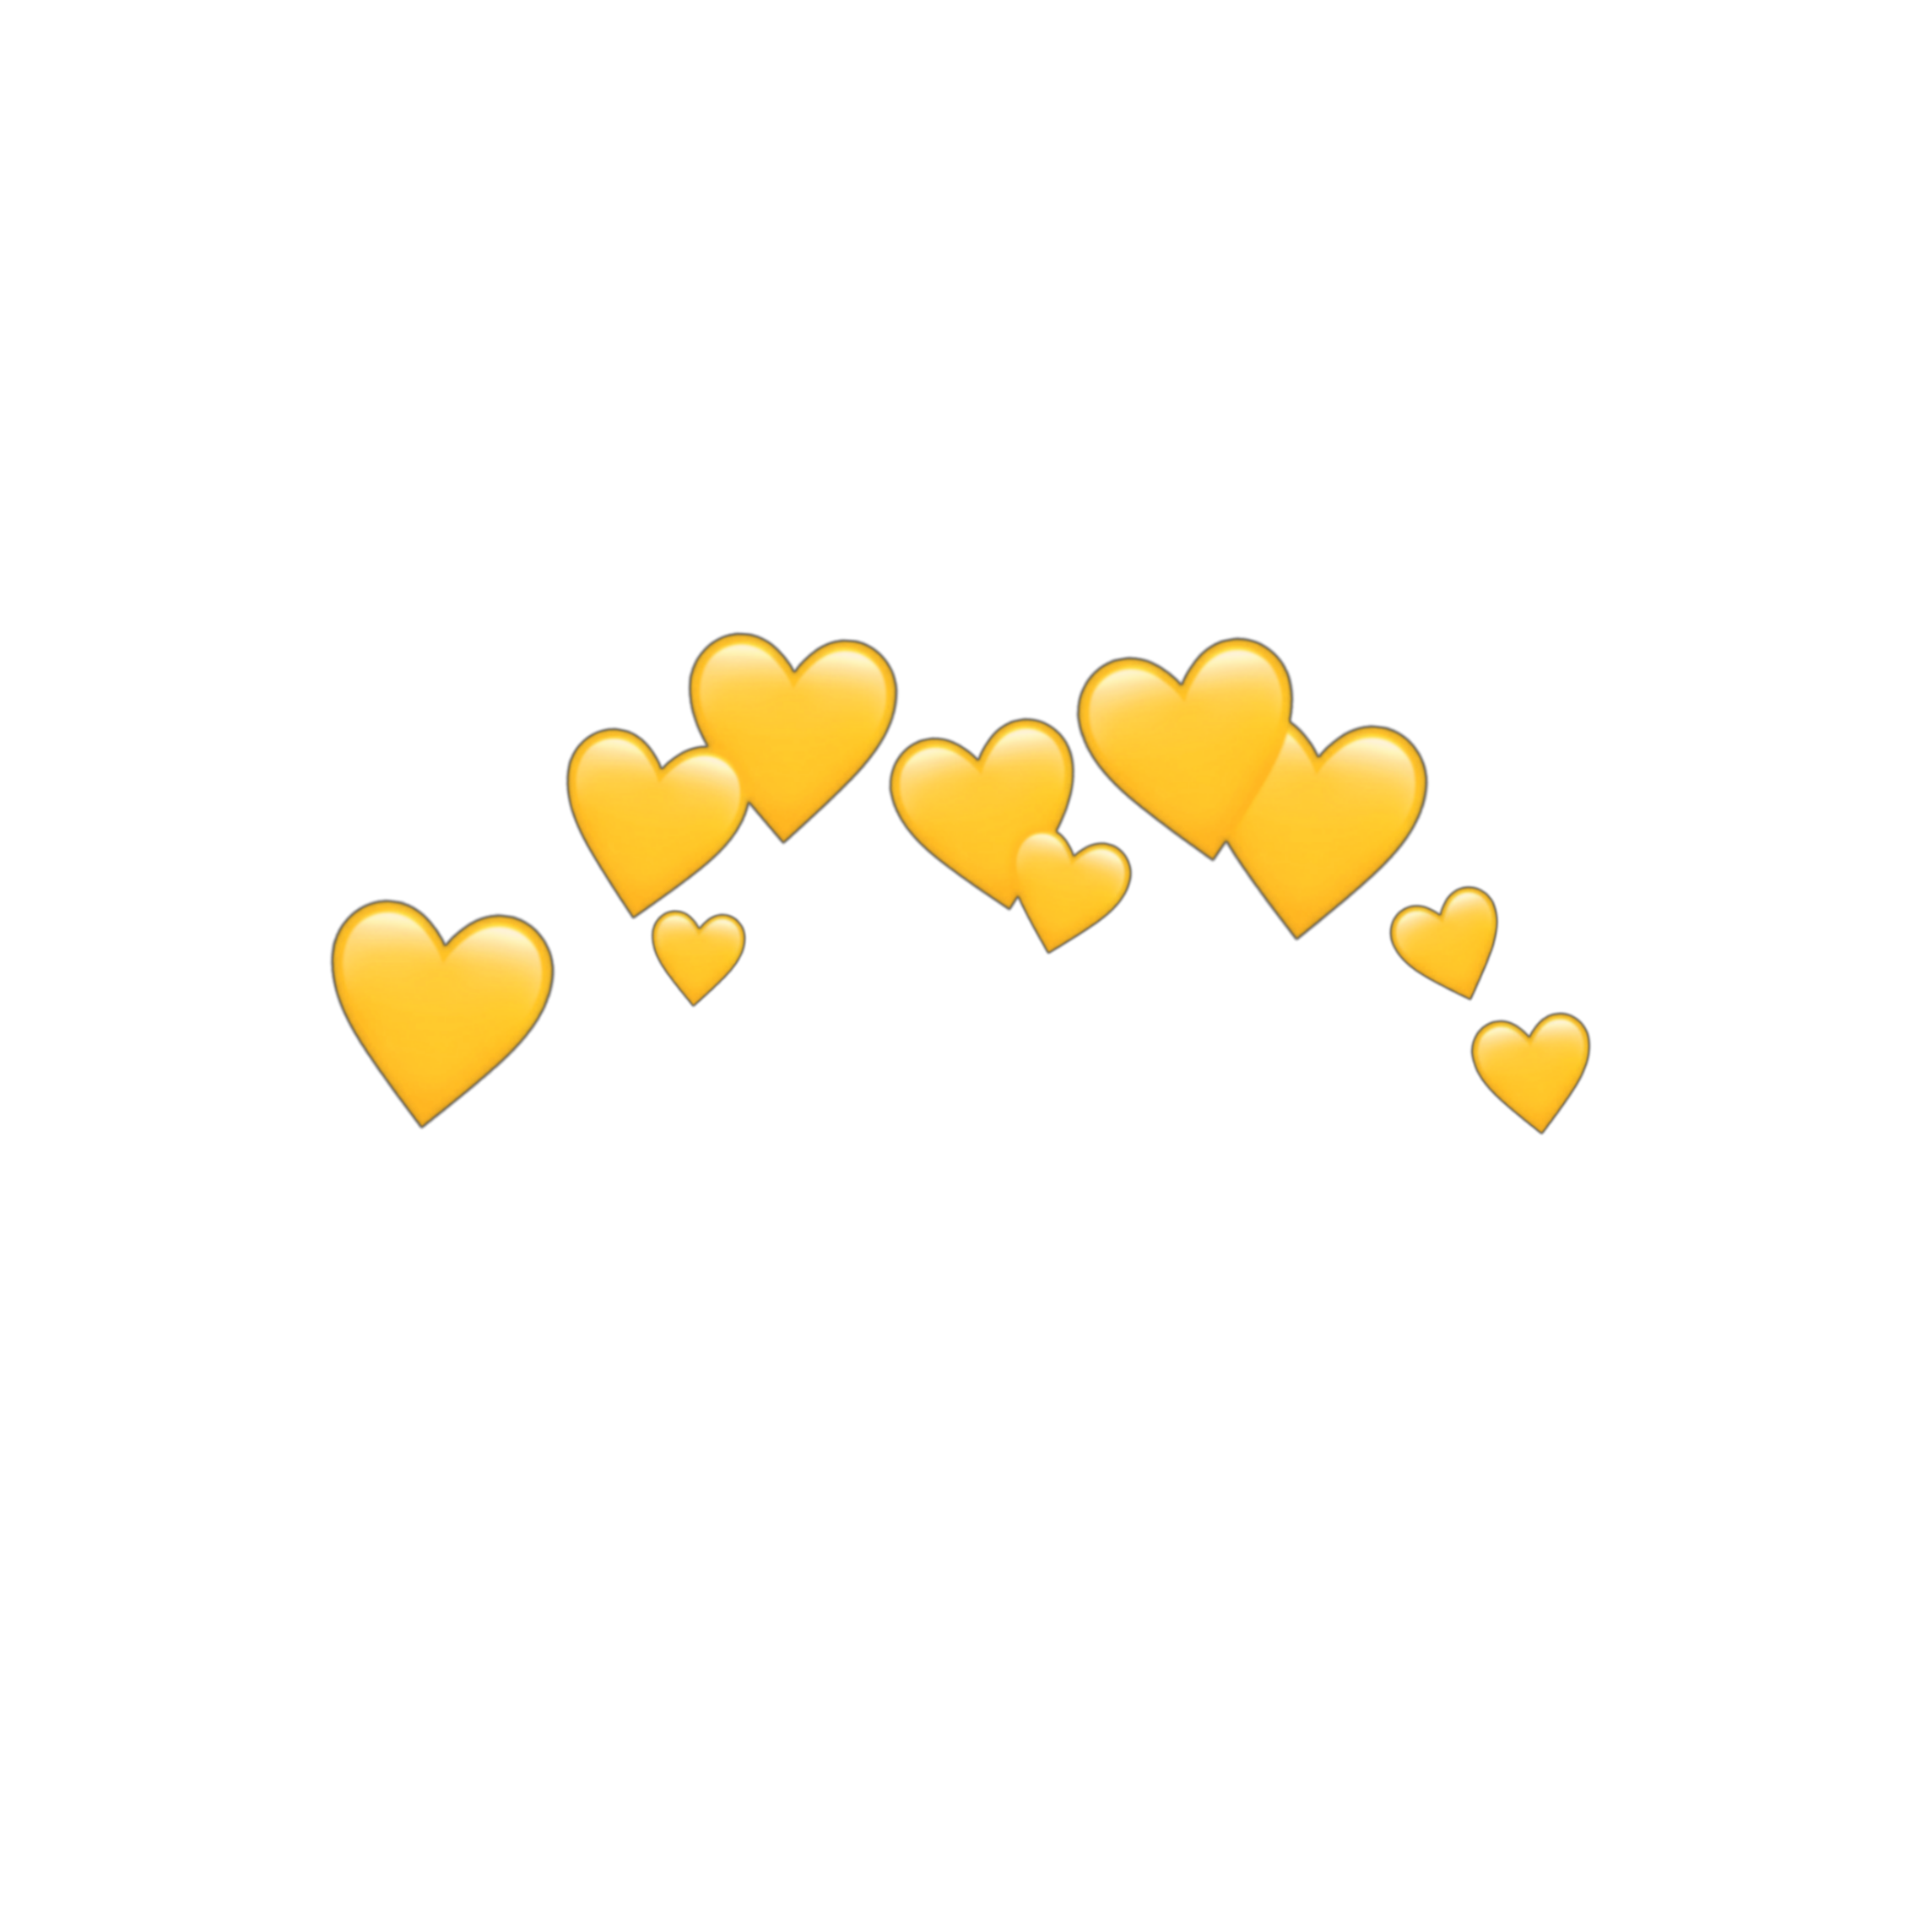 yellow yellowcrown emoji emojis sticker by @classic_alien